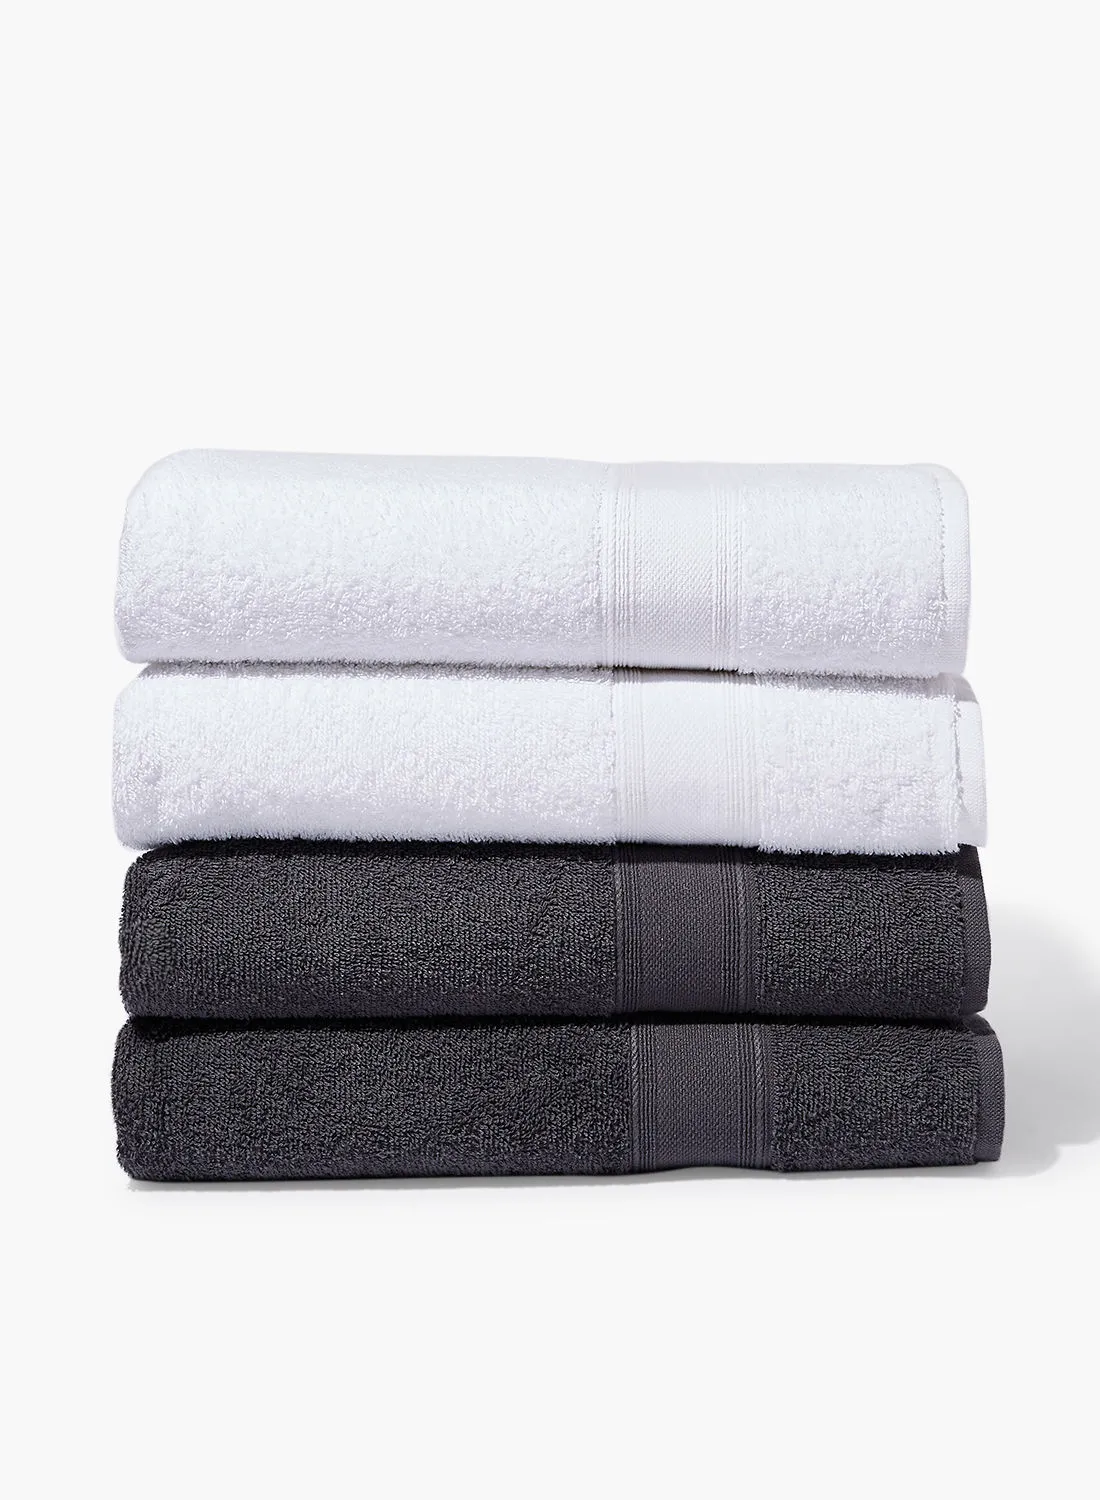 Amal 4 Piece Bathroom Towel Set - 400 GSM 100% Cotton Terry - 4 Bath Towel - Multicolor White/Ash Grey Color -Quick Dry - Super Absorbent